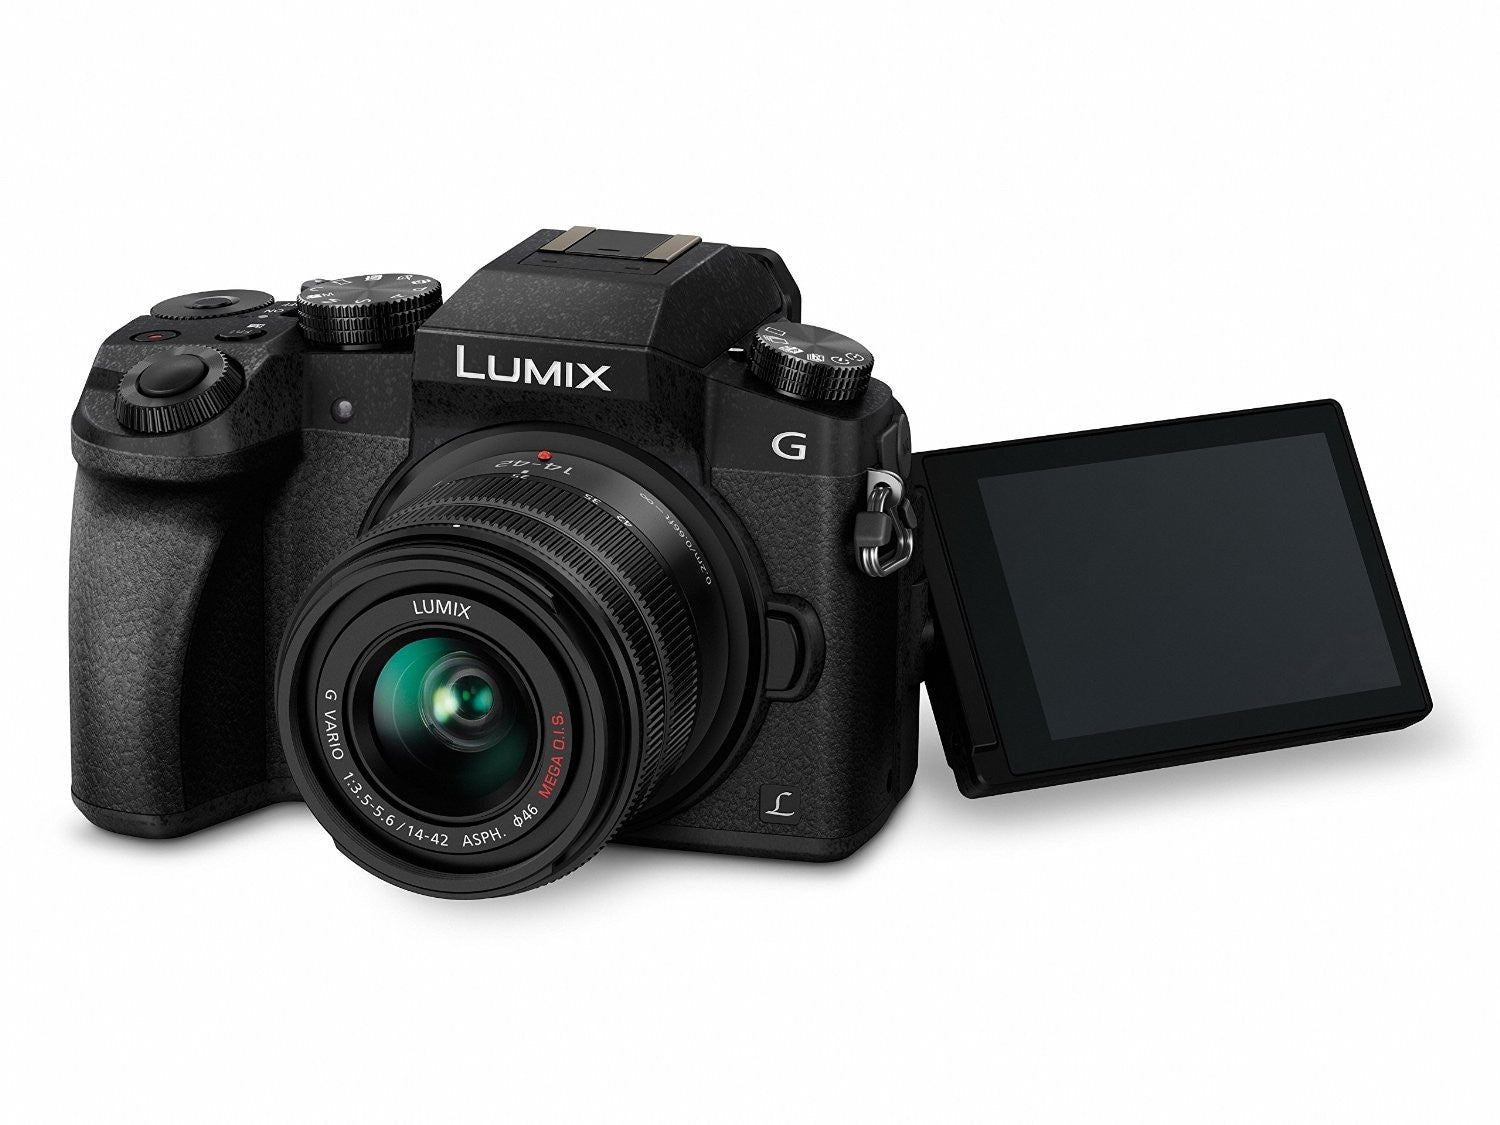 Product Image of Panasonic Lumix DMC-G7K Camera with 14-42mm Lens Black